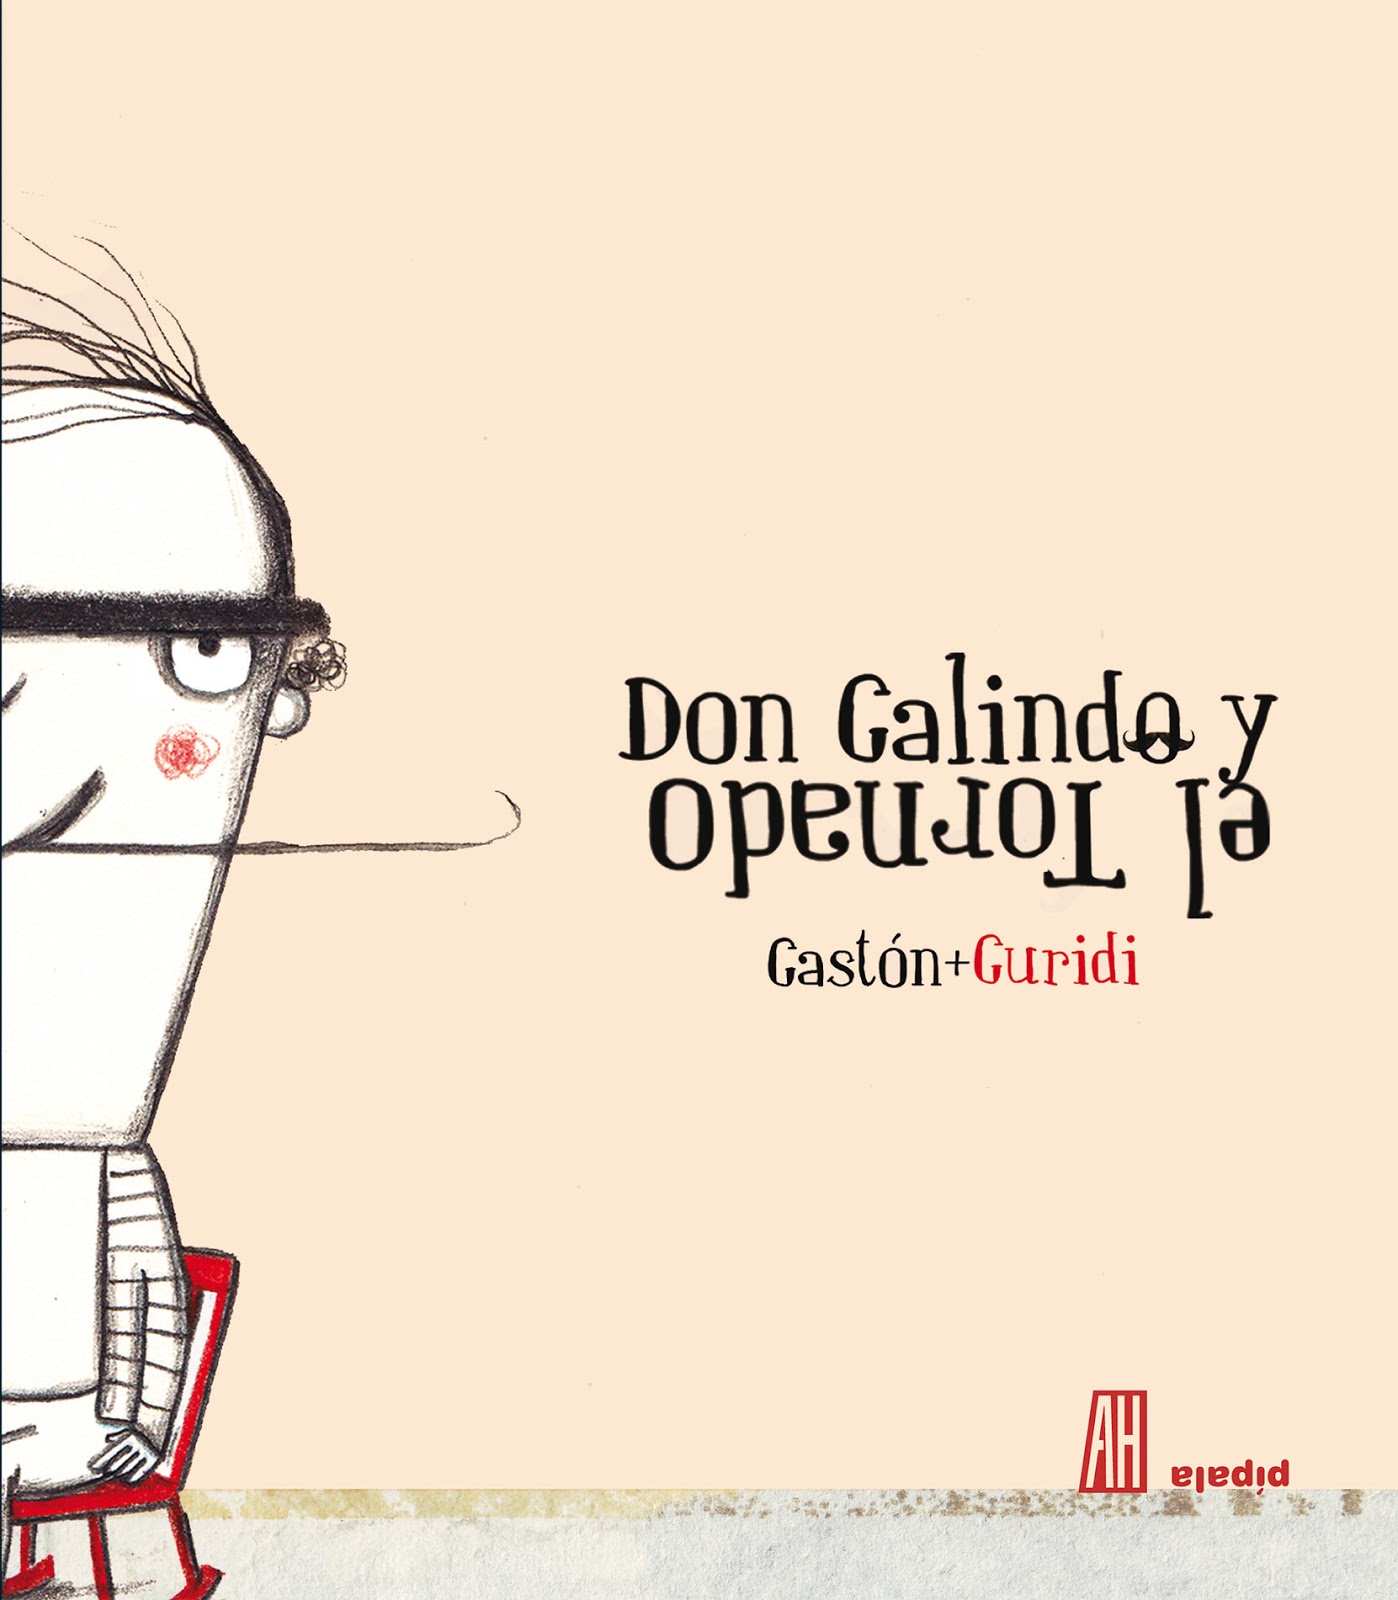 Don Galindo